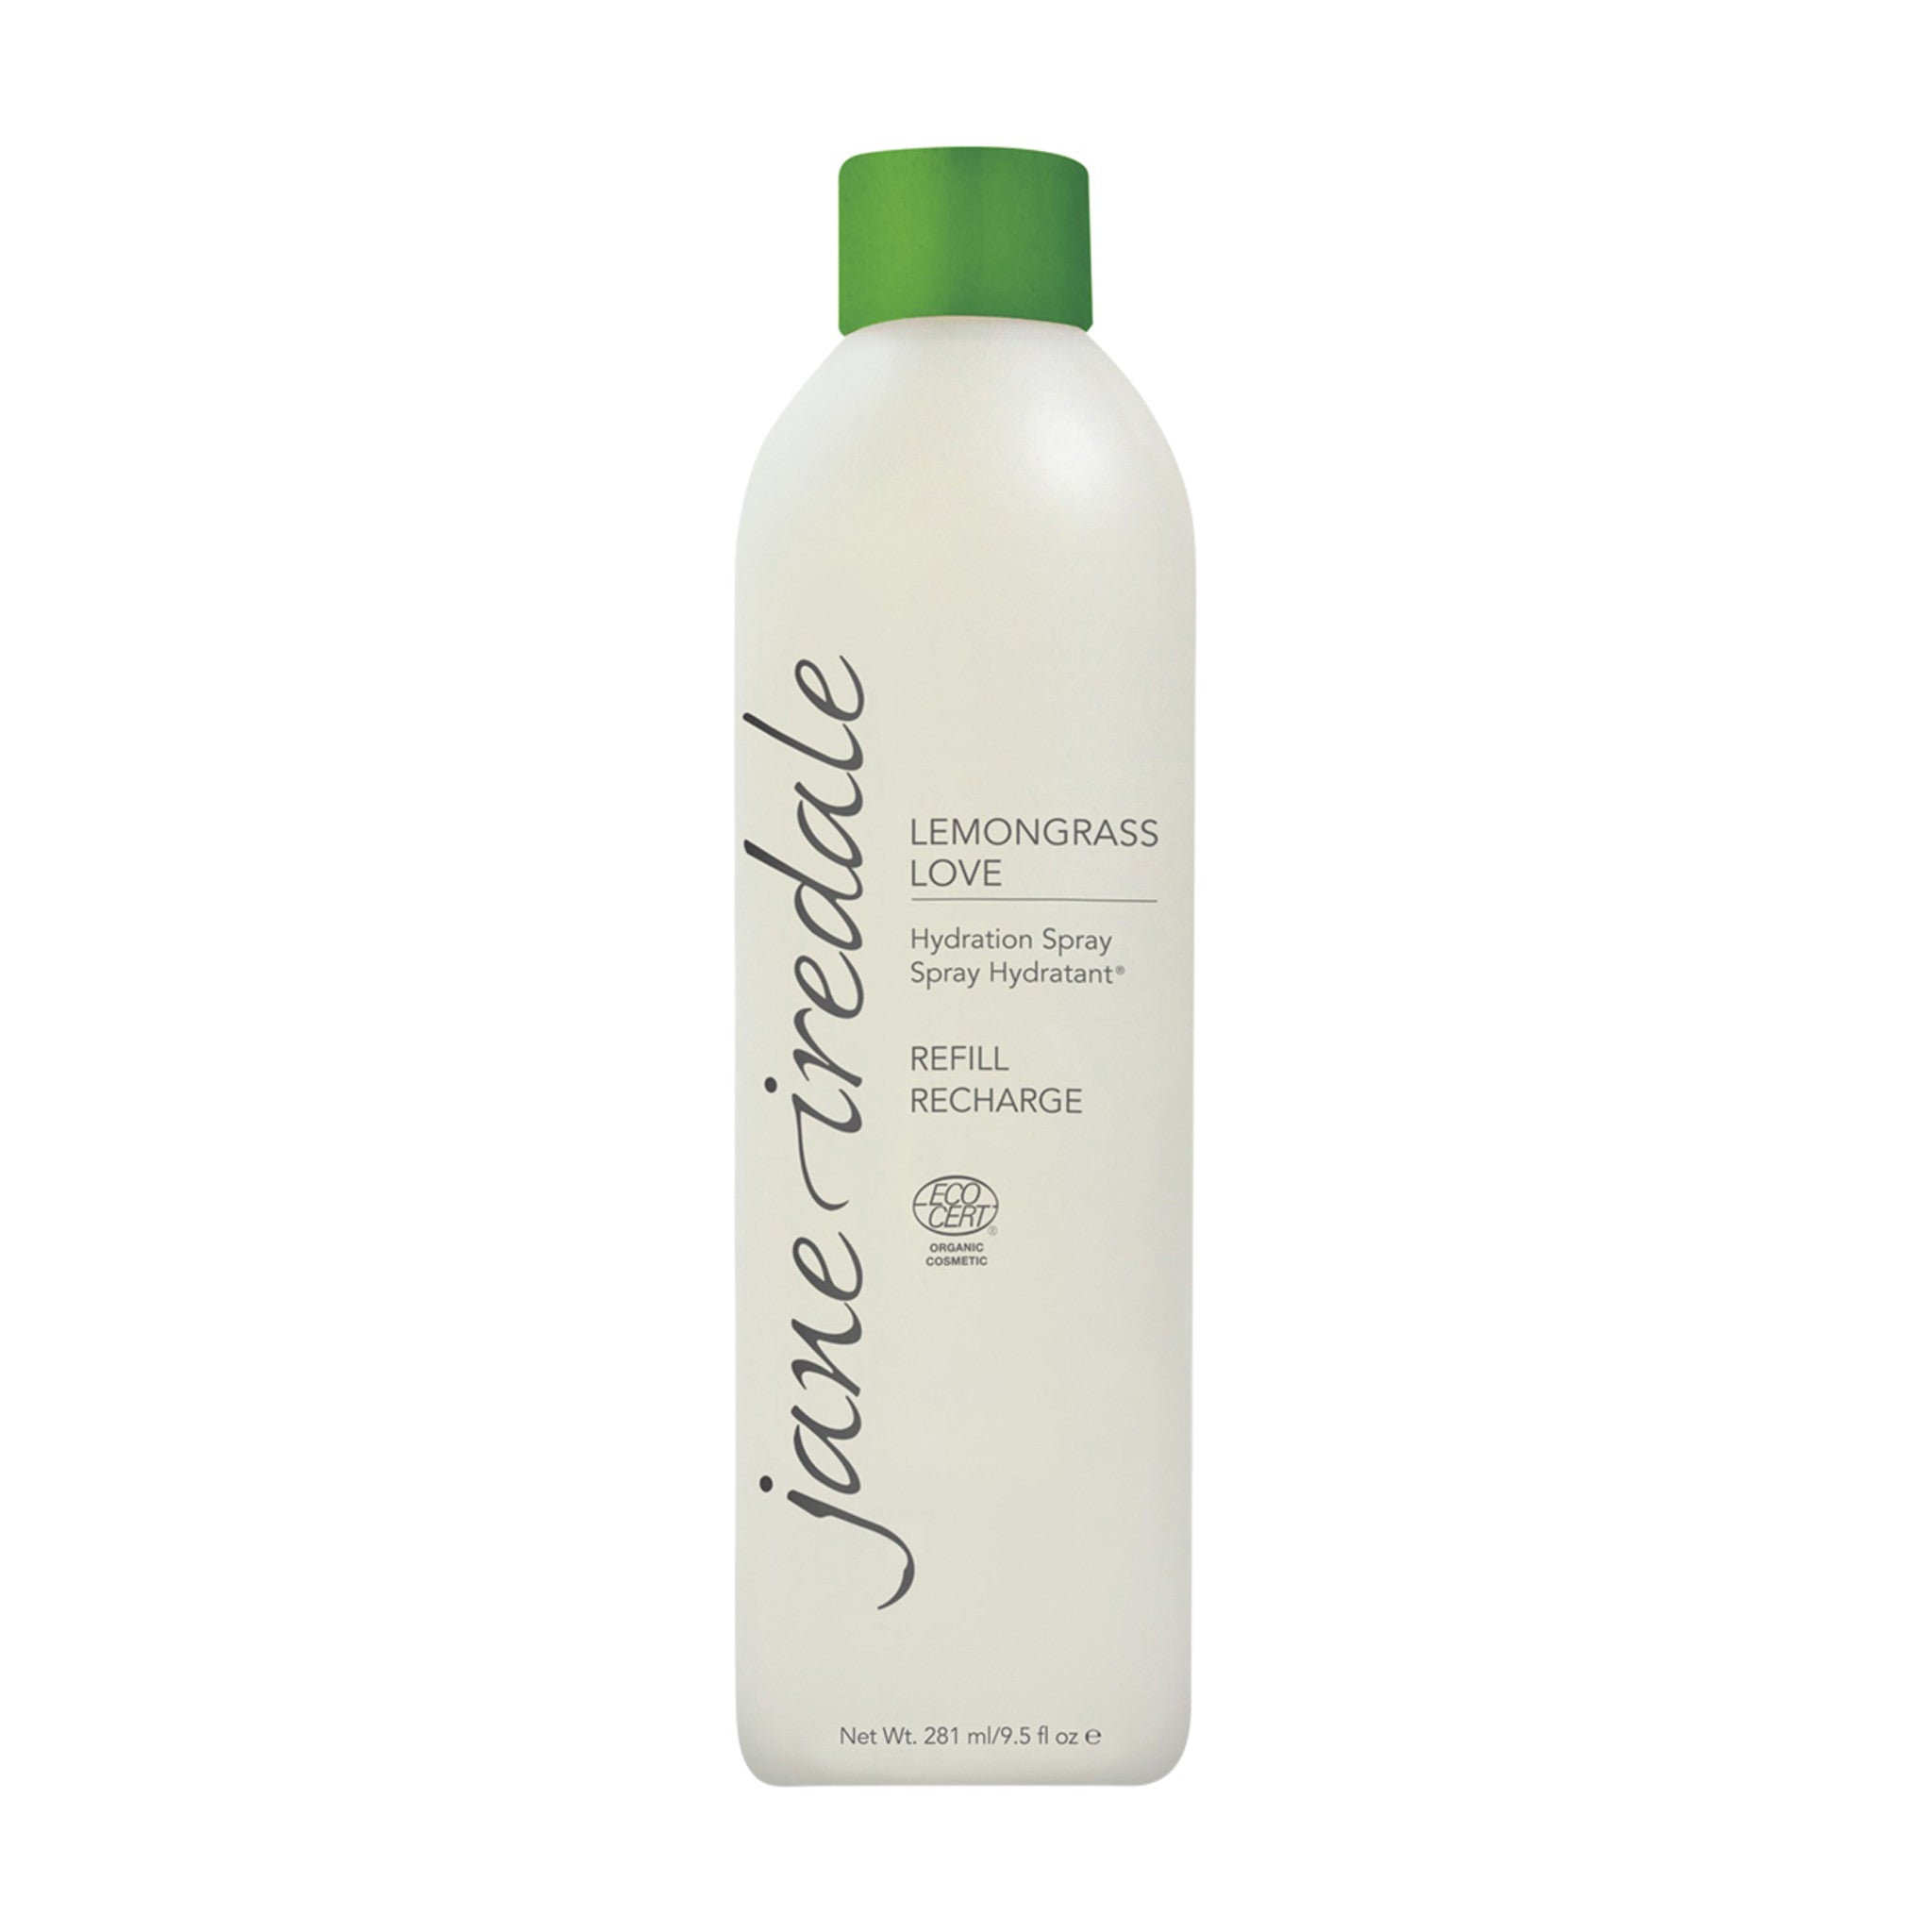 Jane Iredale Lemongrass Love Hydration Spray Natural Refill main image.